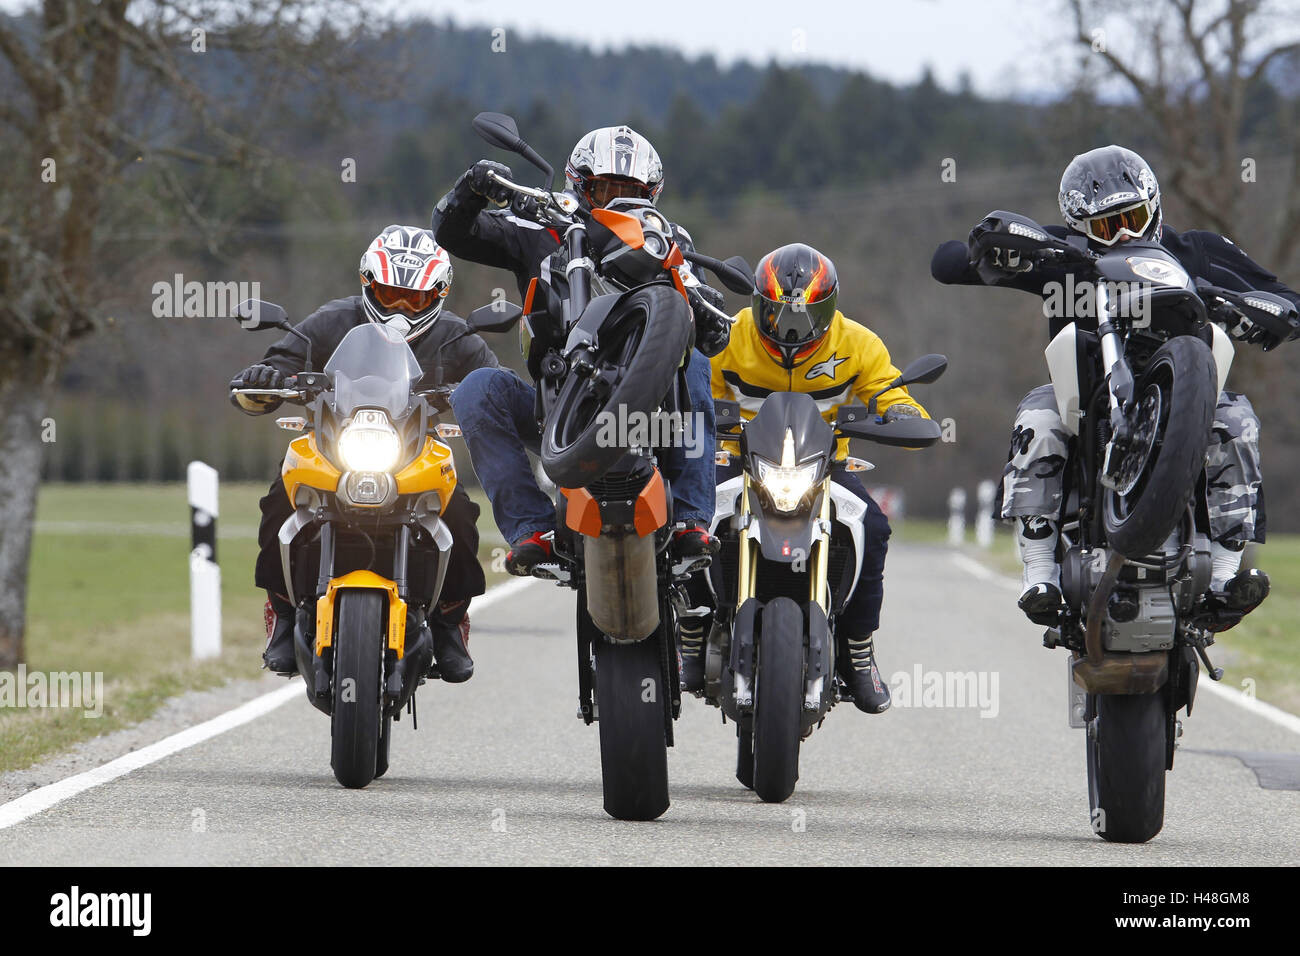 El motorista, cuatro motocicletas, bicicletas, diversión country road,  grupo de motocicletas, caballito, frontalmente Fotografía de stock - Alamy